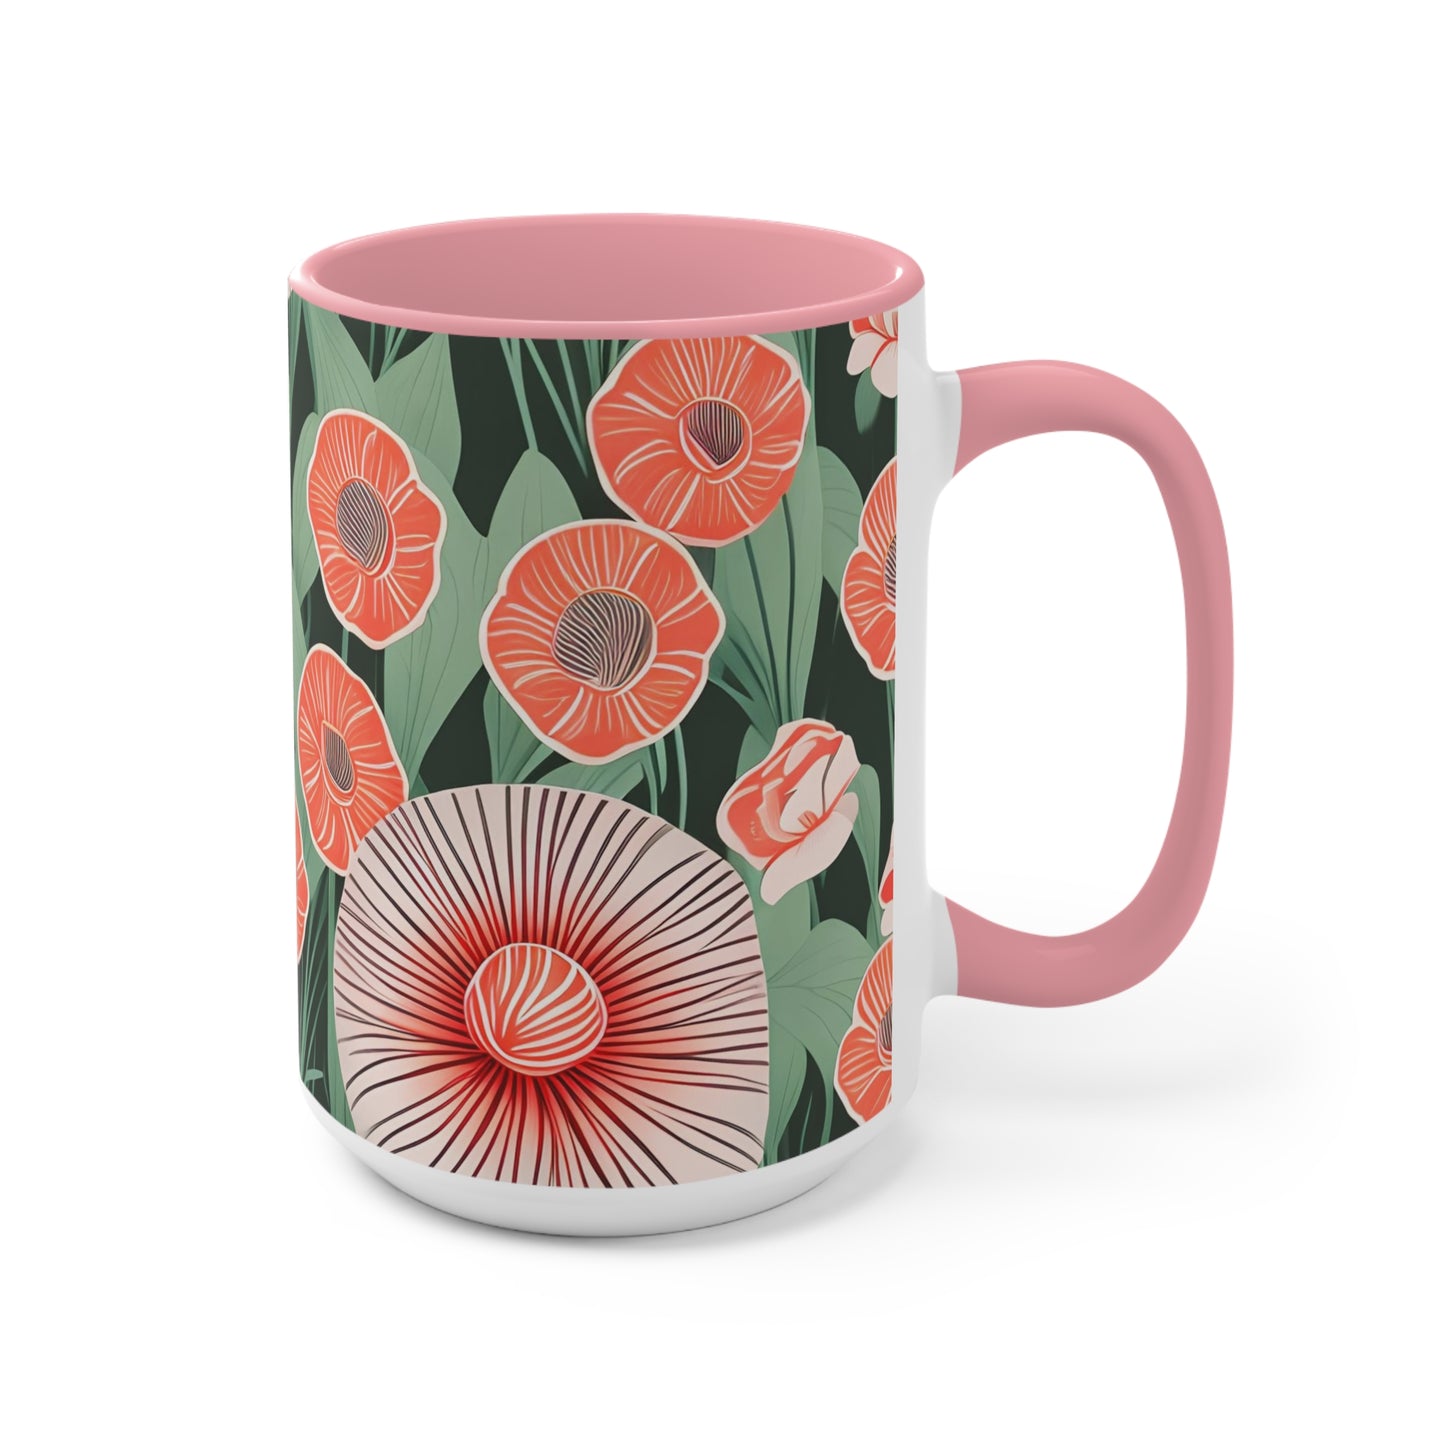 Art Deco Flowers, Ceramic Mug - Perfect for Coffee, Tea, and More!